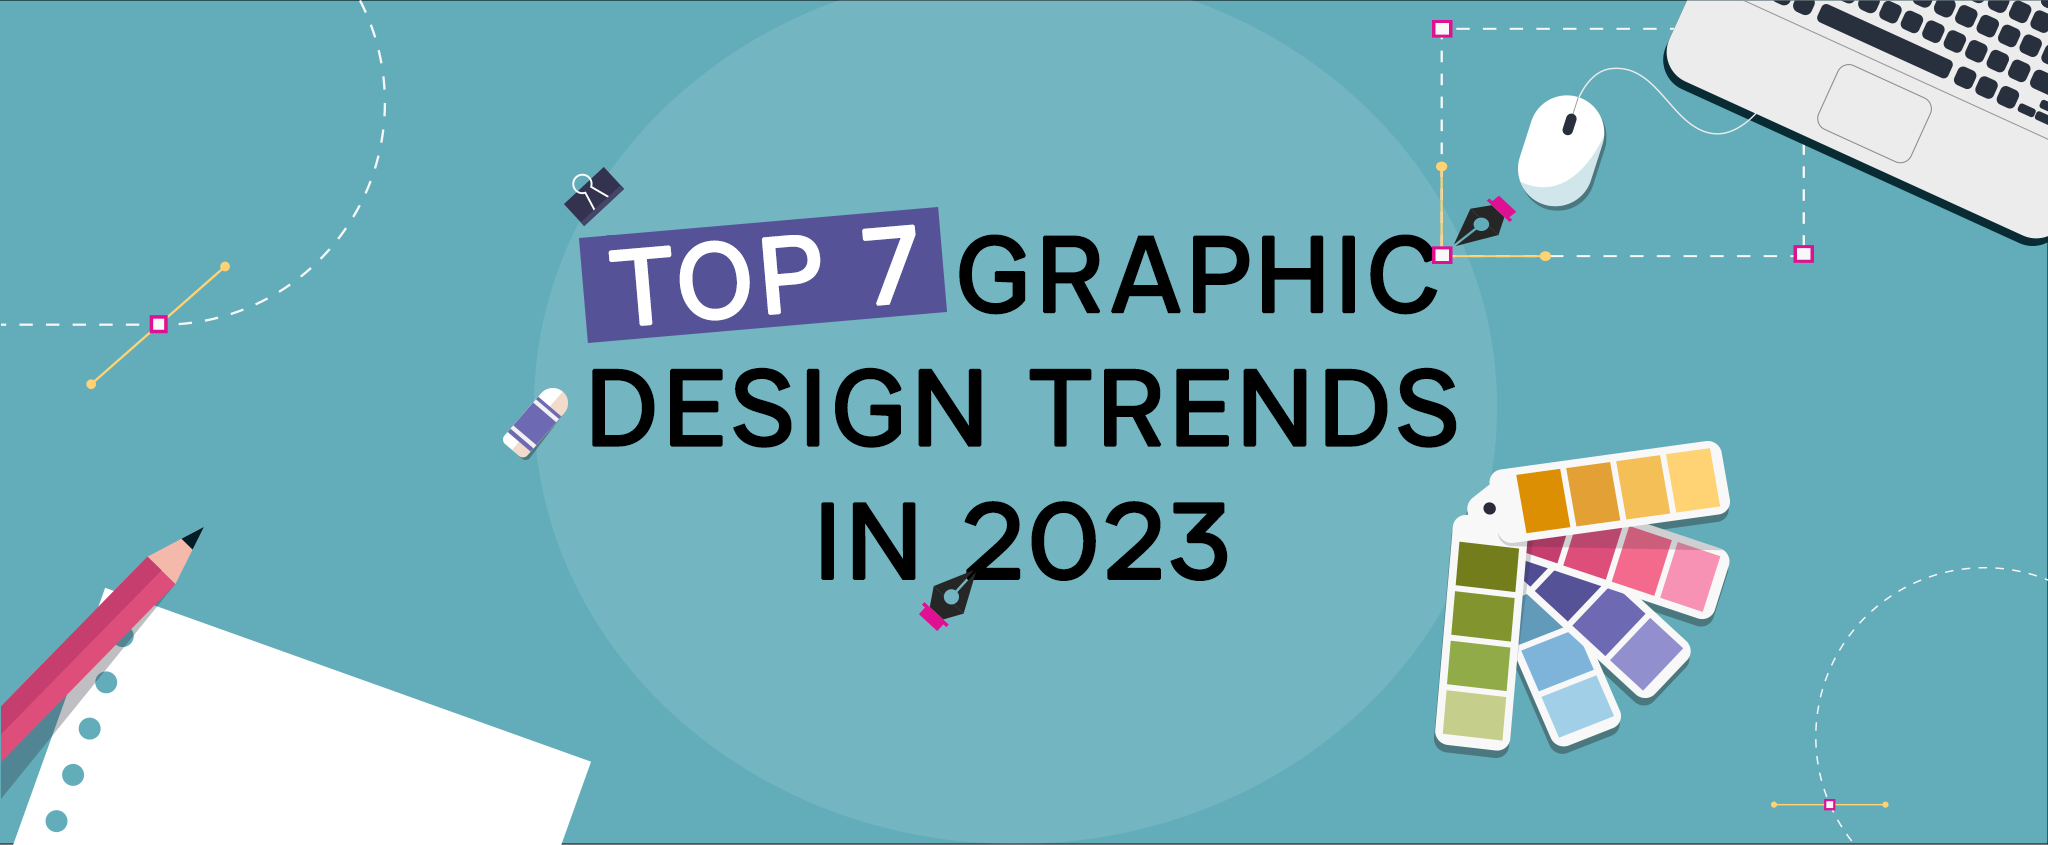 Top 7 Graphic Design Trends in 2023